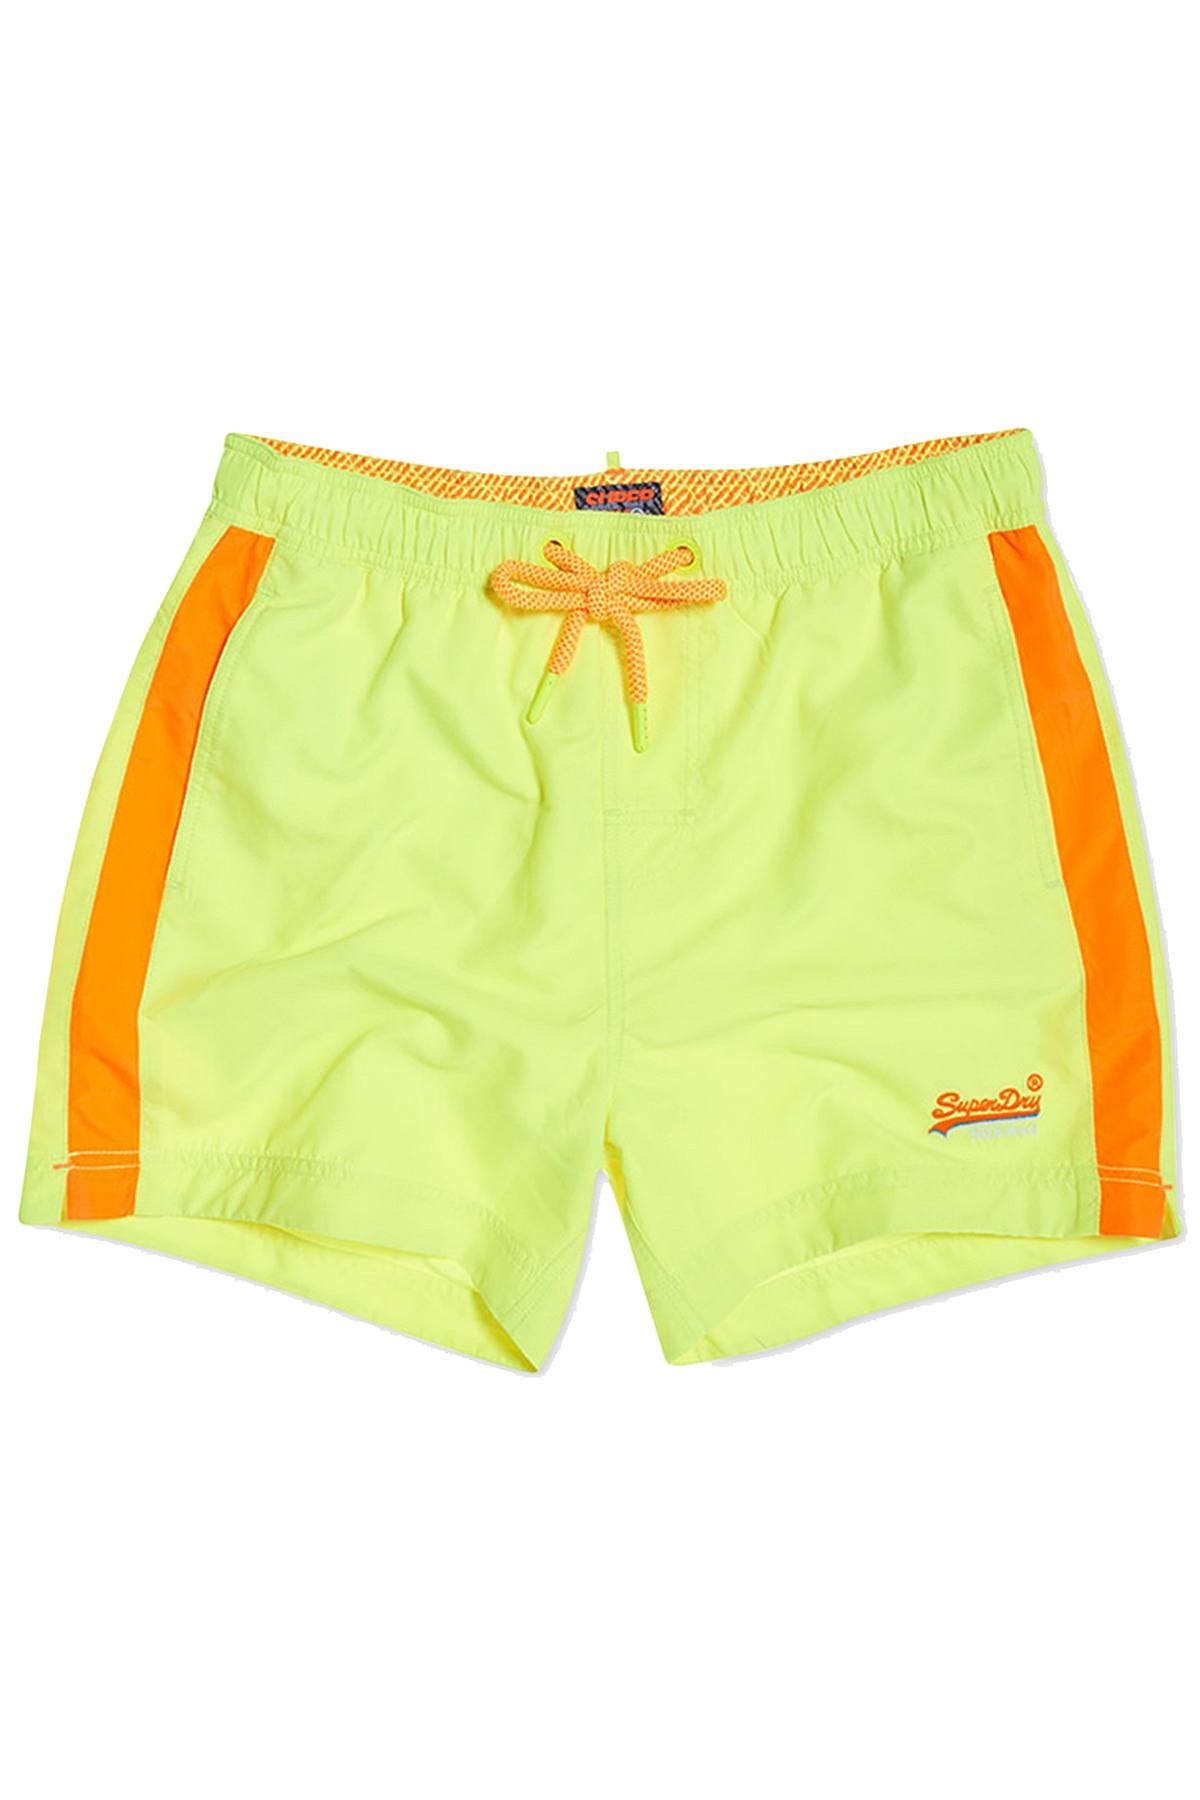 SuperDry Sunblast-Yellow Beach Volley Swim Short